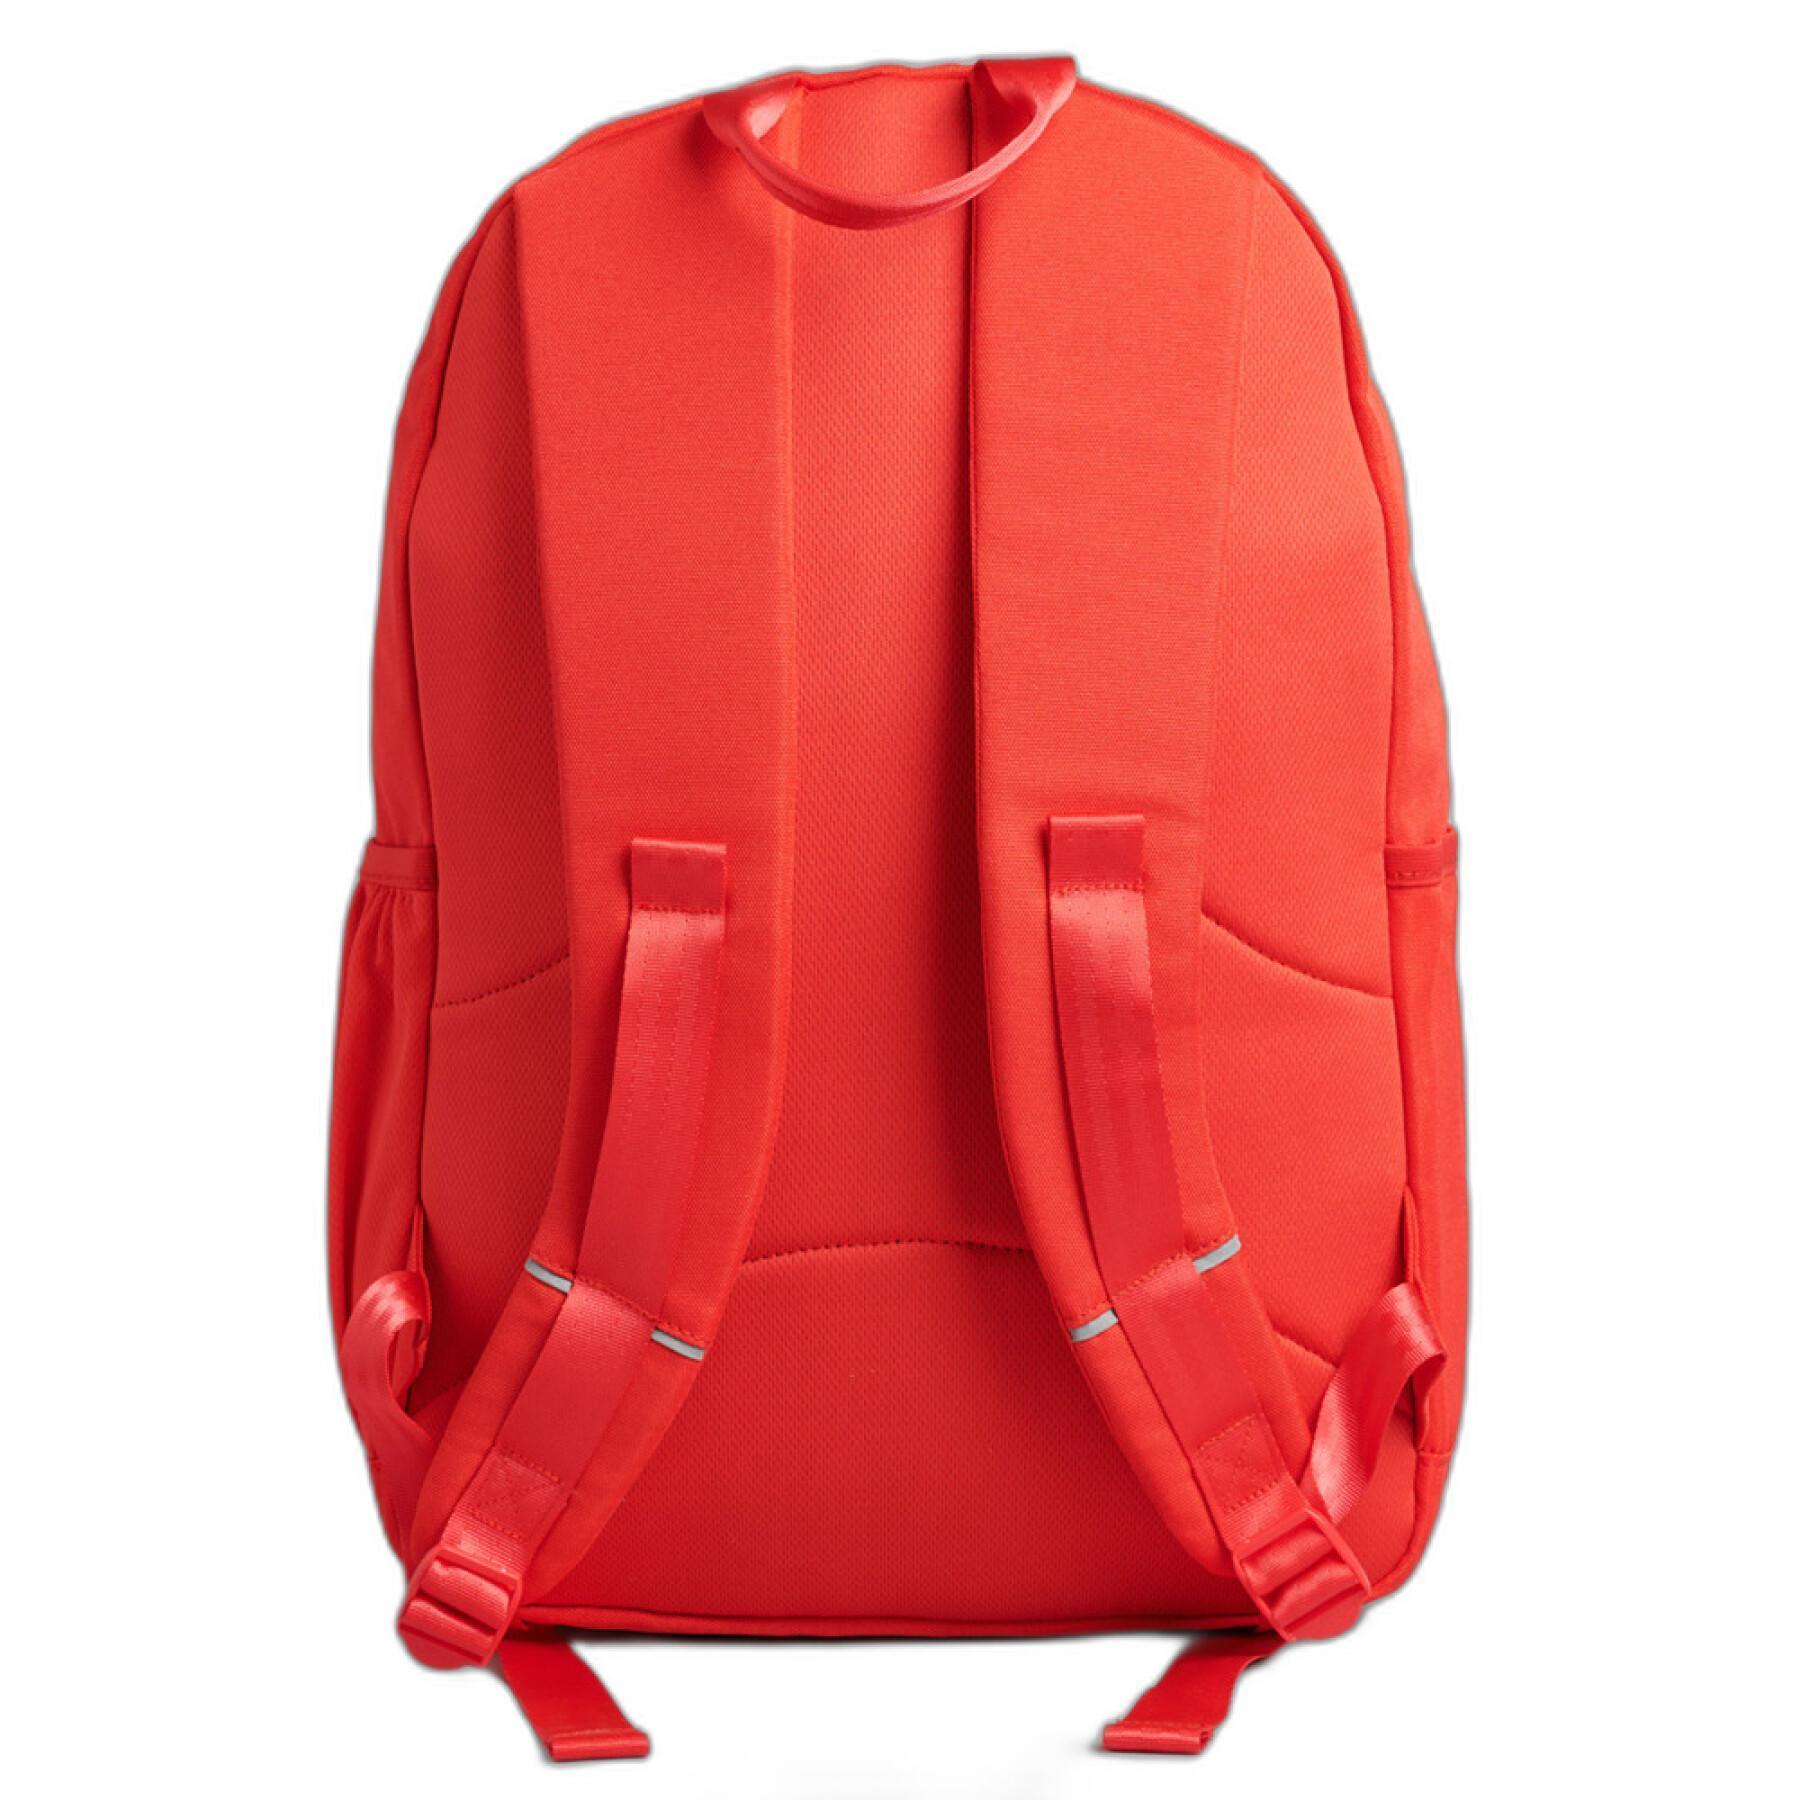 Backpack Superdry Code Essential Montana